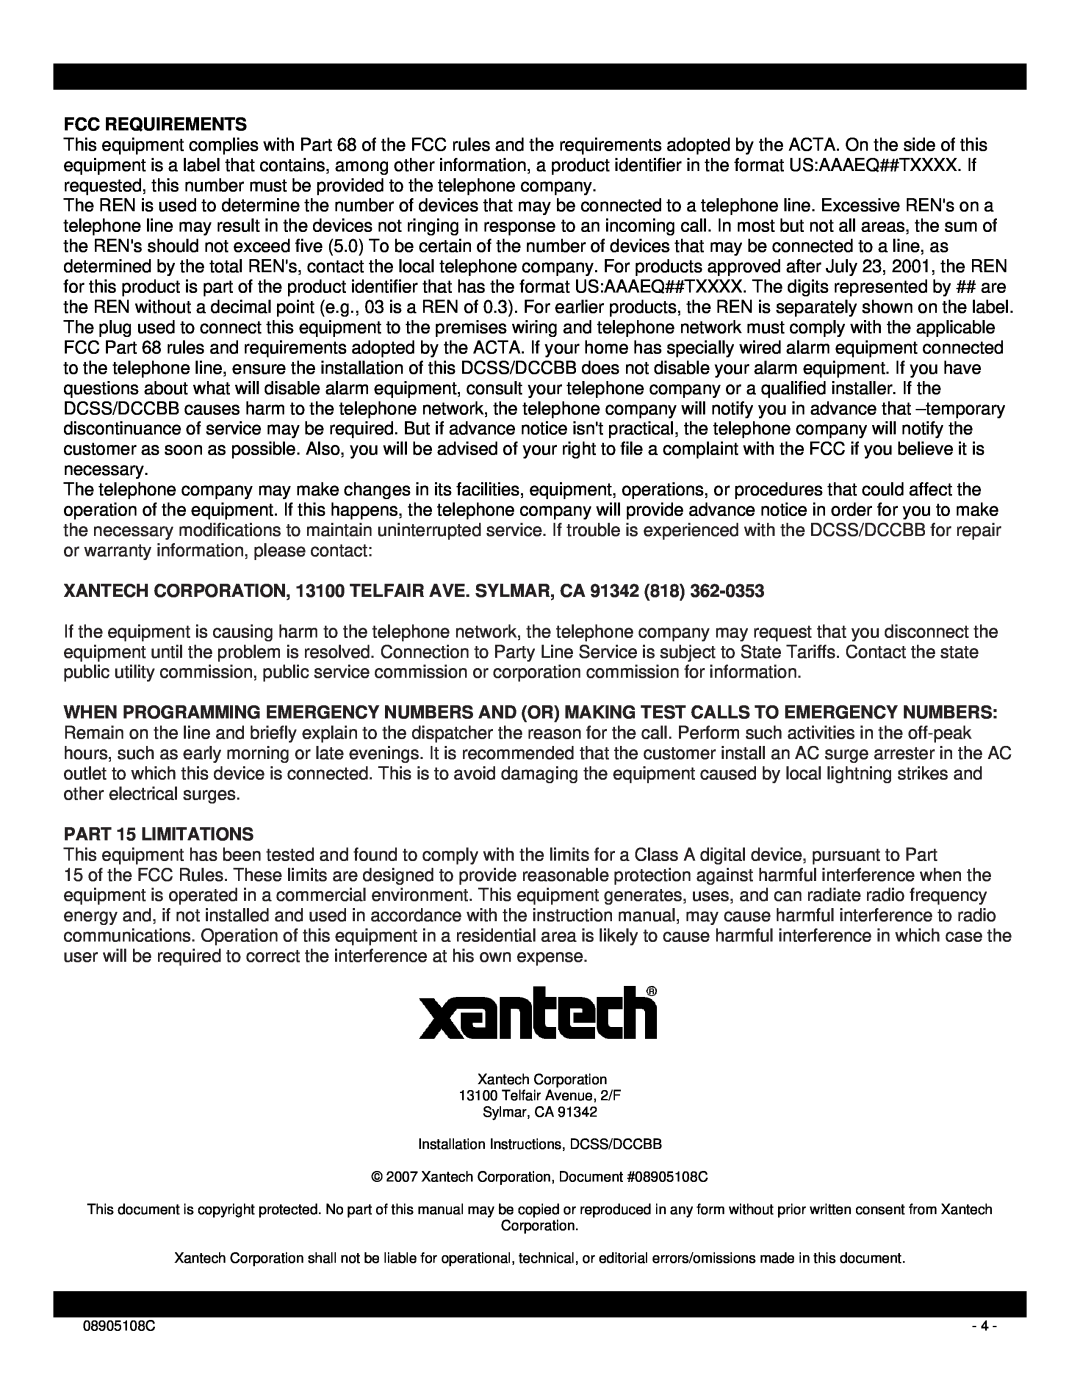 Xantech DCSS, DCCBB installation instructions Fcc Requirements 